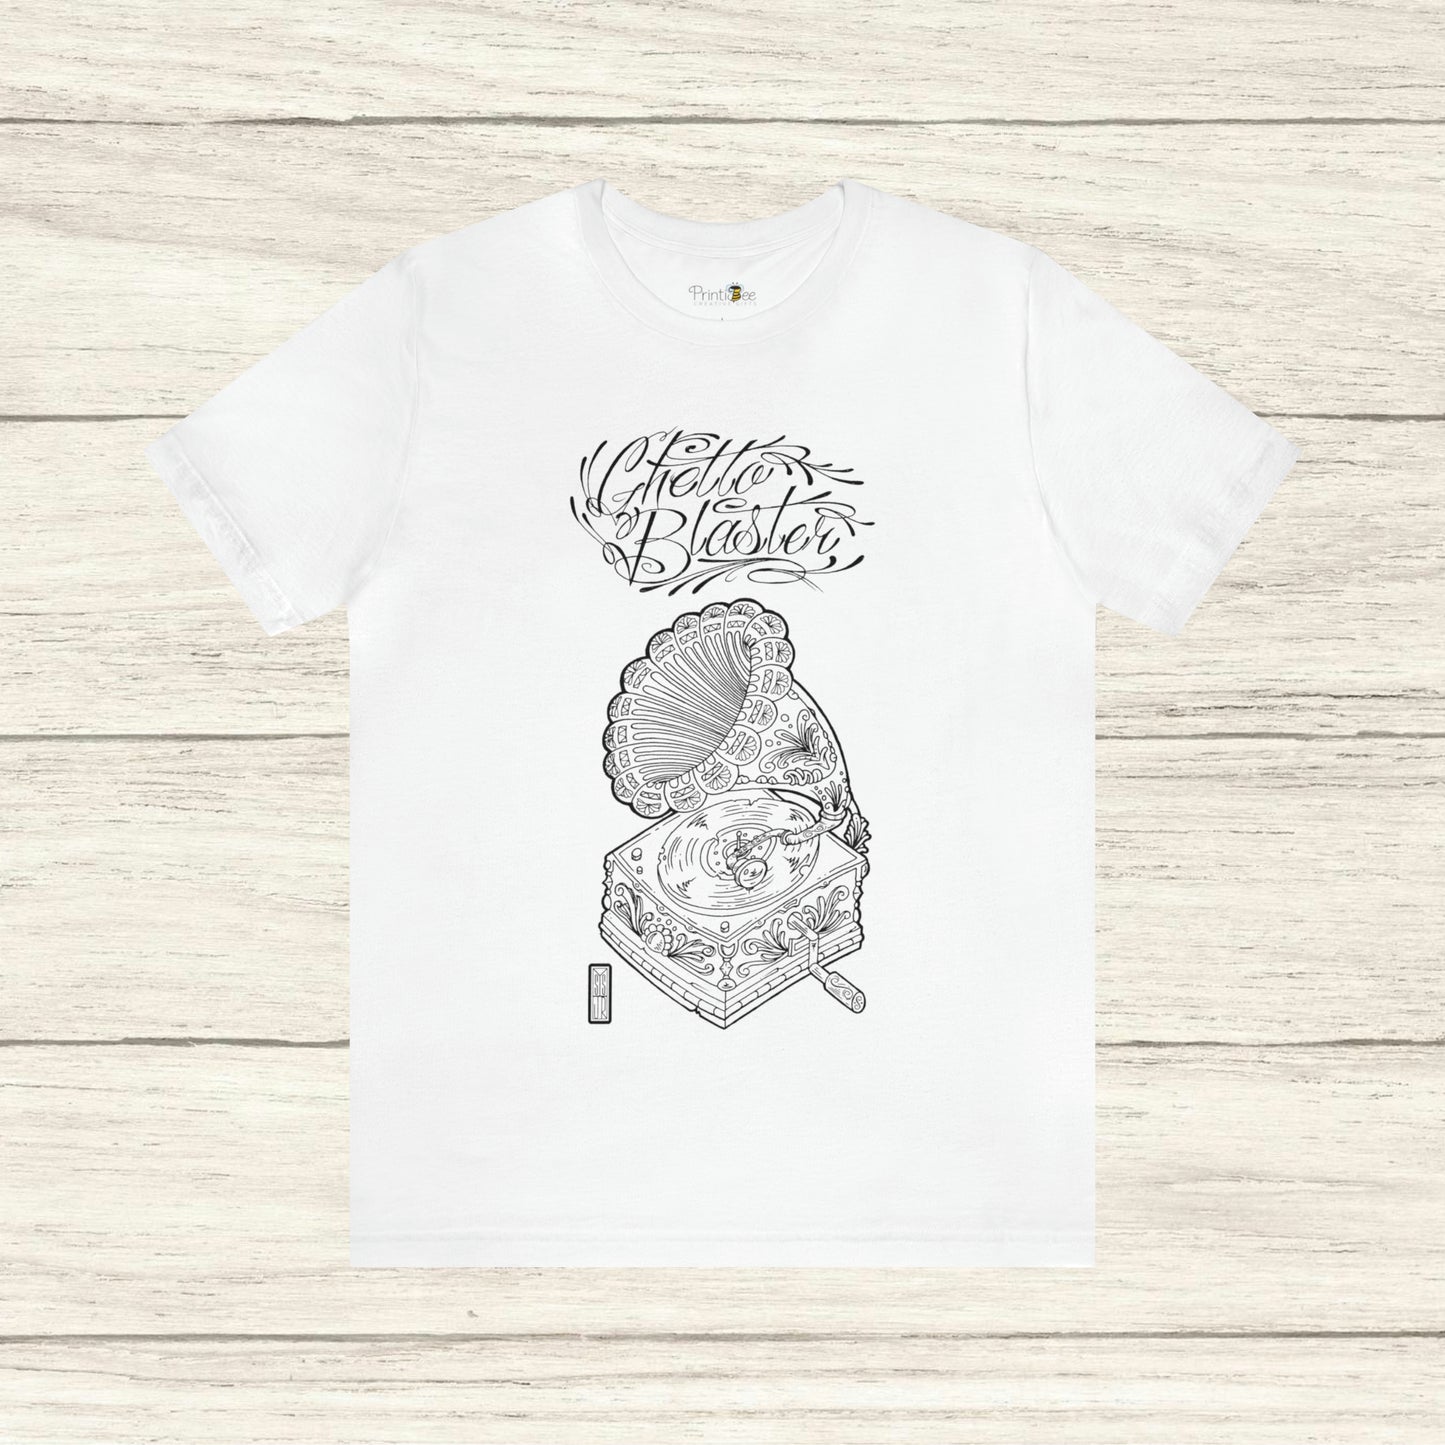 Ghetto Blaster, camiseta de arte lineal